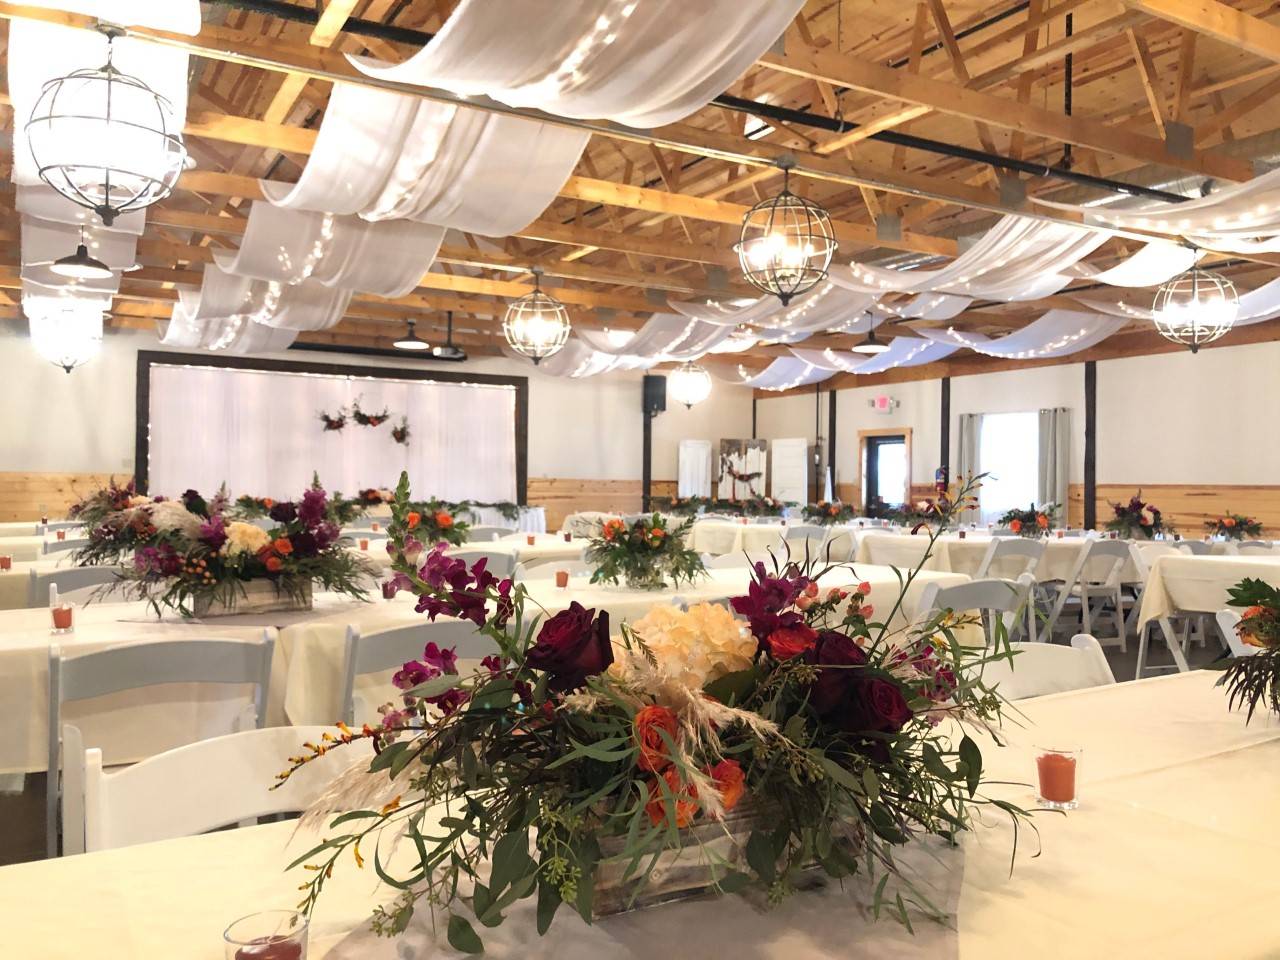 Elkhorn Ridge Event Center decorated for a Winter Wedding